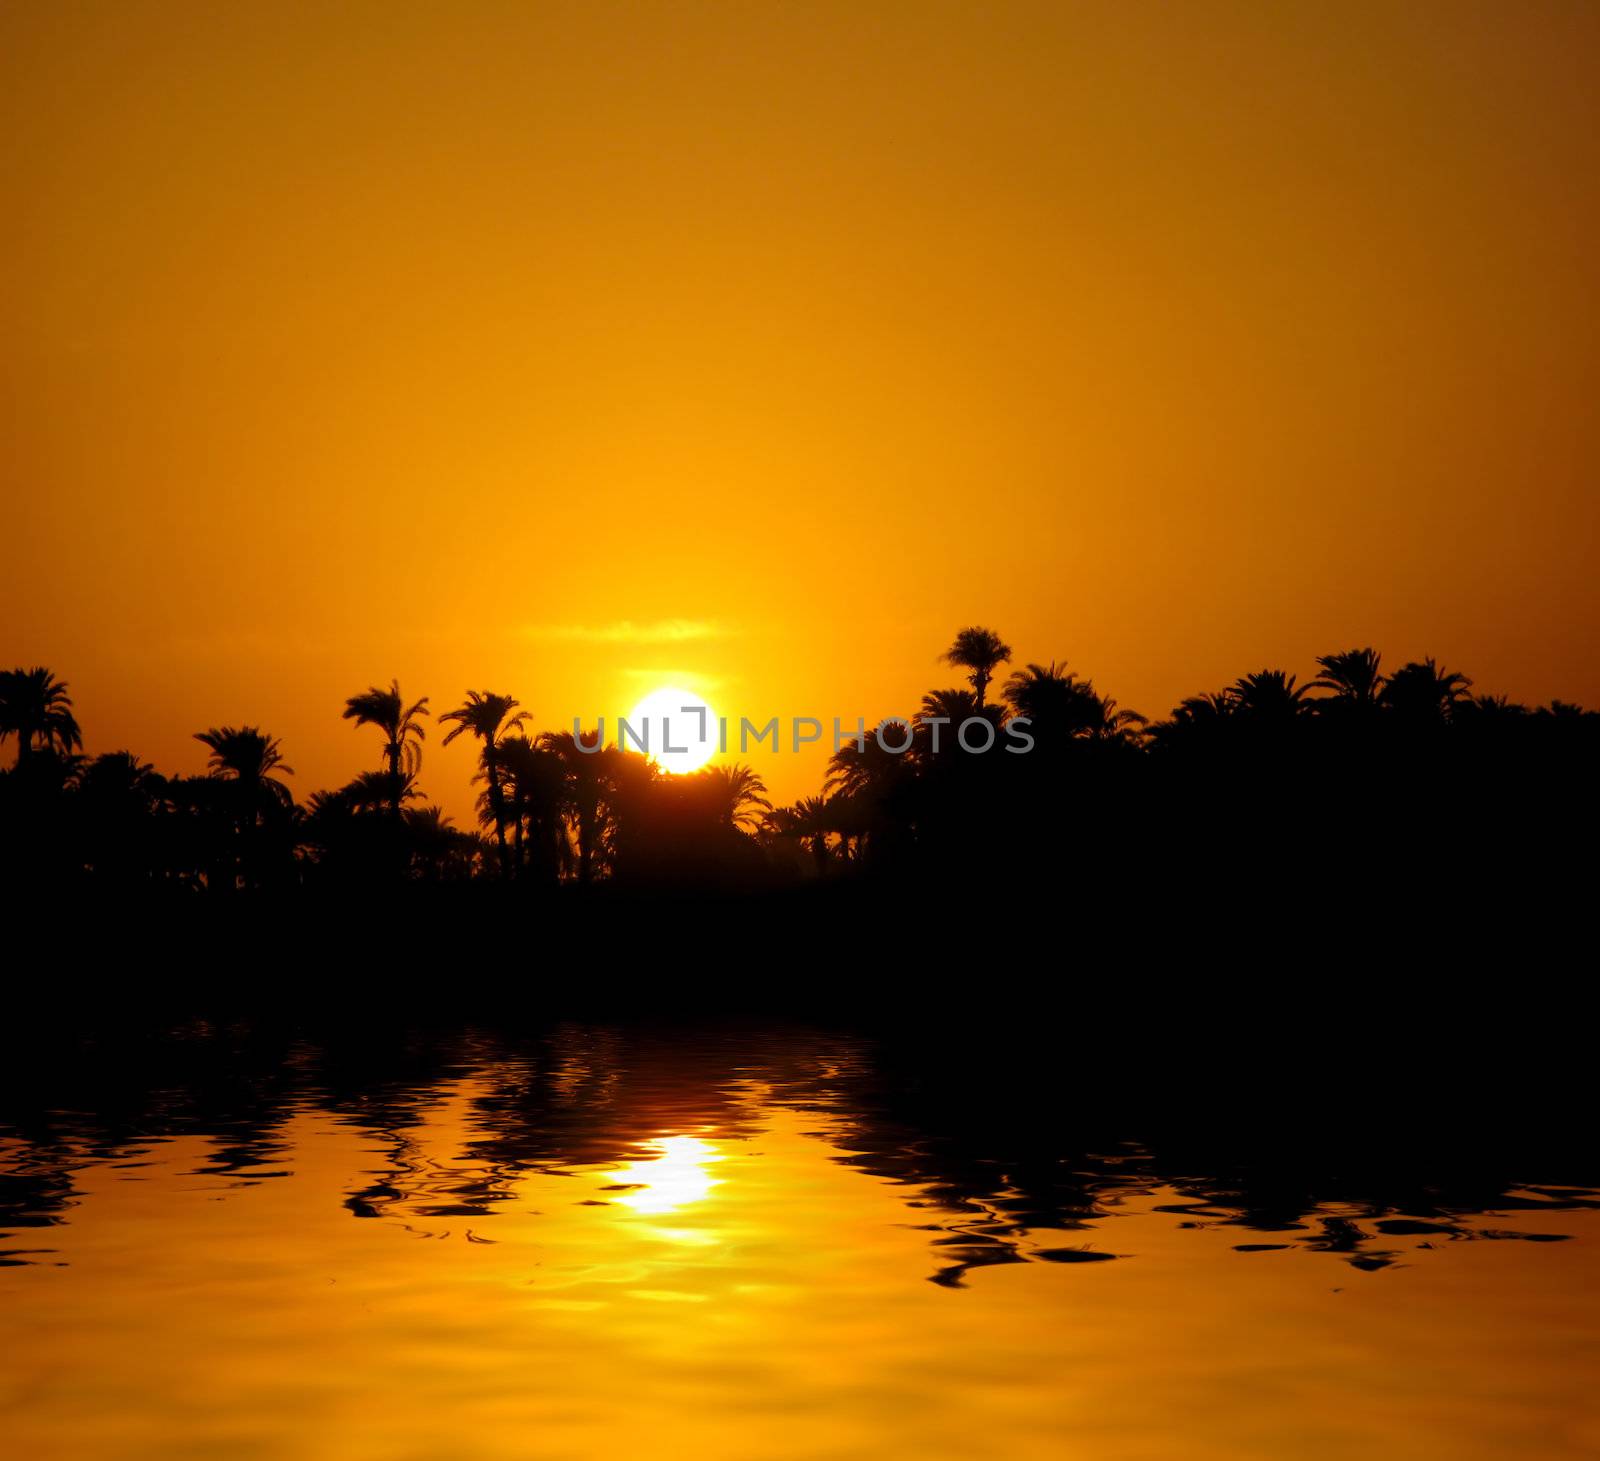 Hot sunset on Nile in Egypt